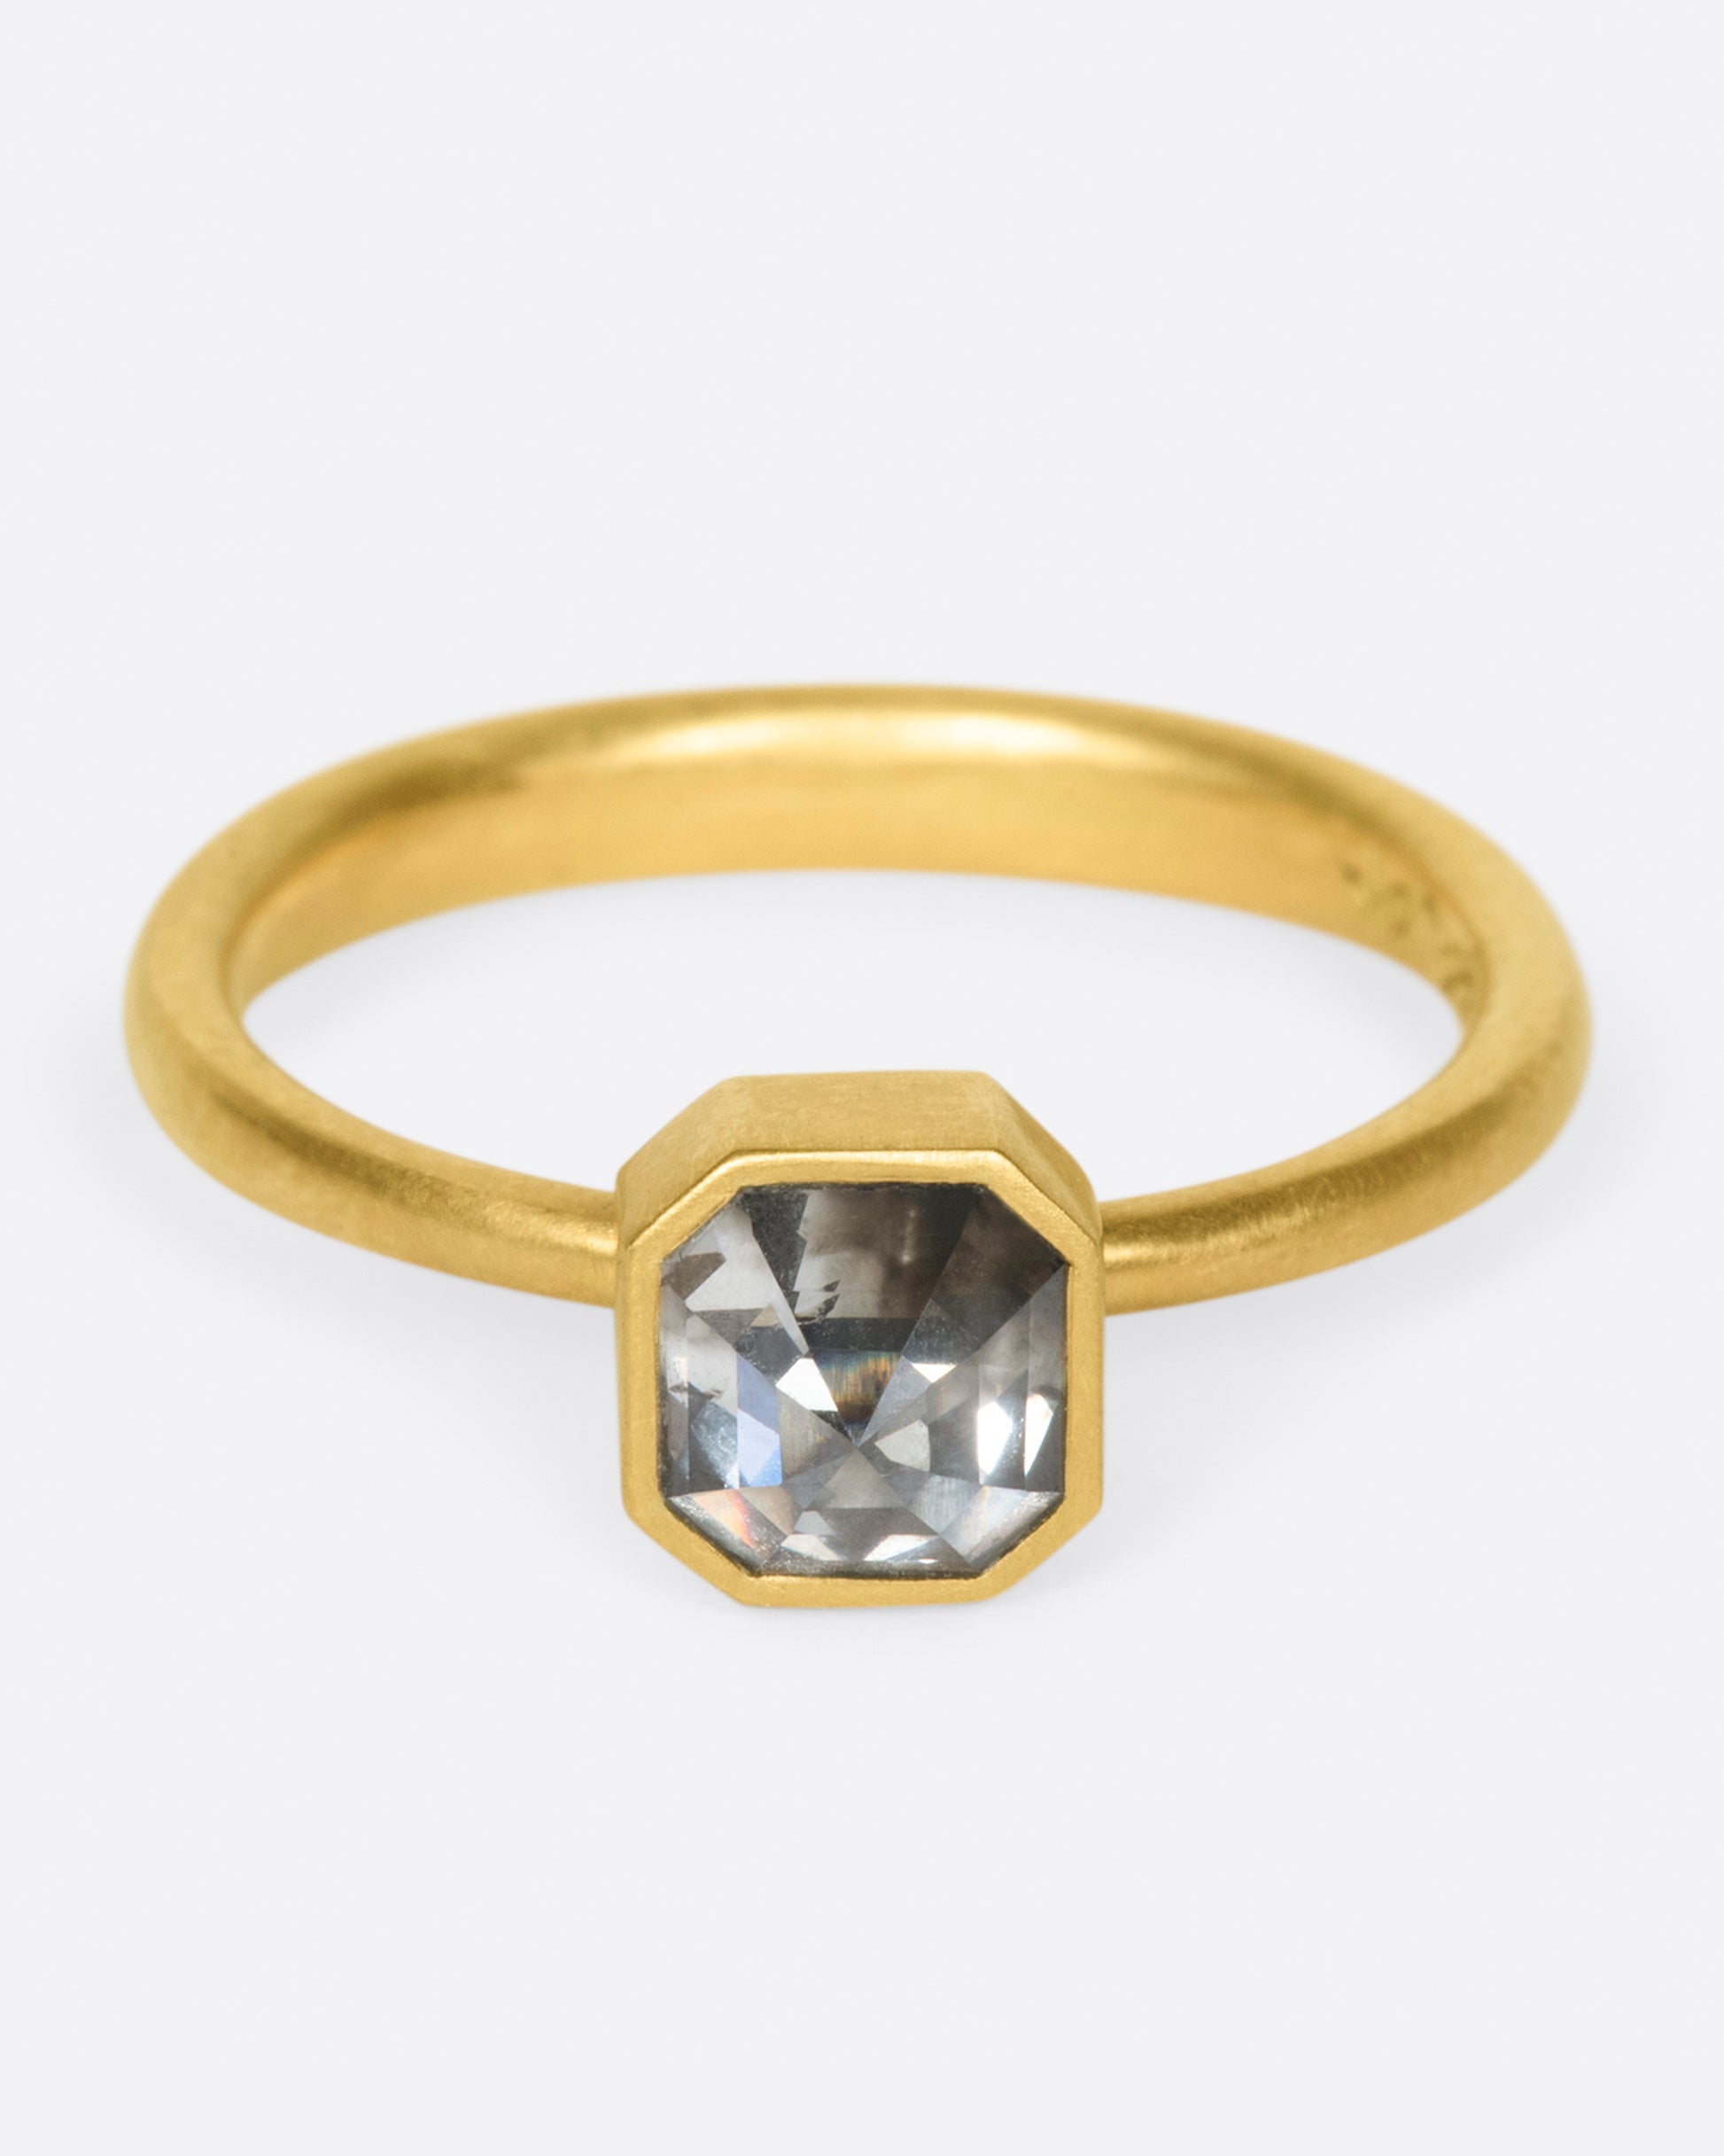 A smokey octagonal diamond ring by Lola Brooks.